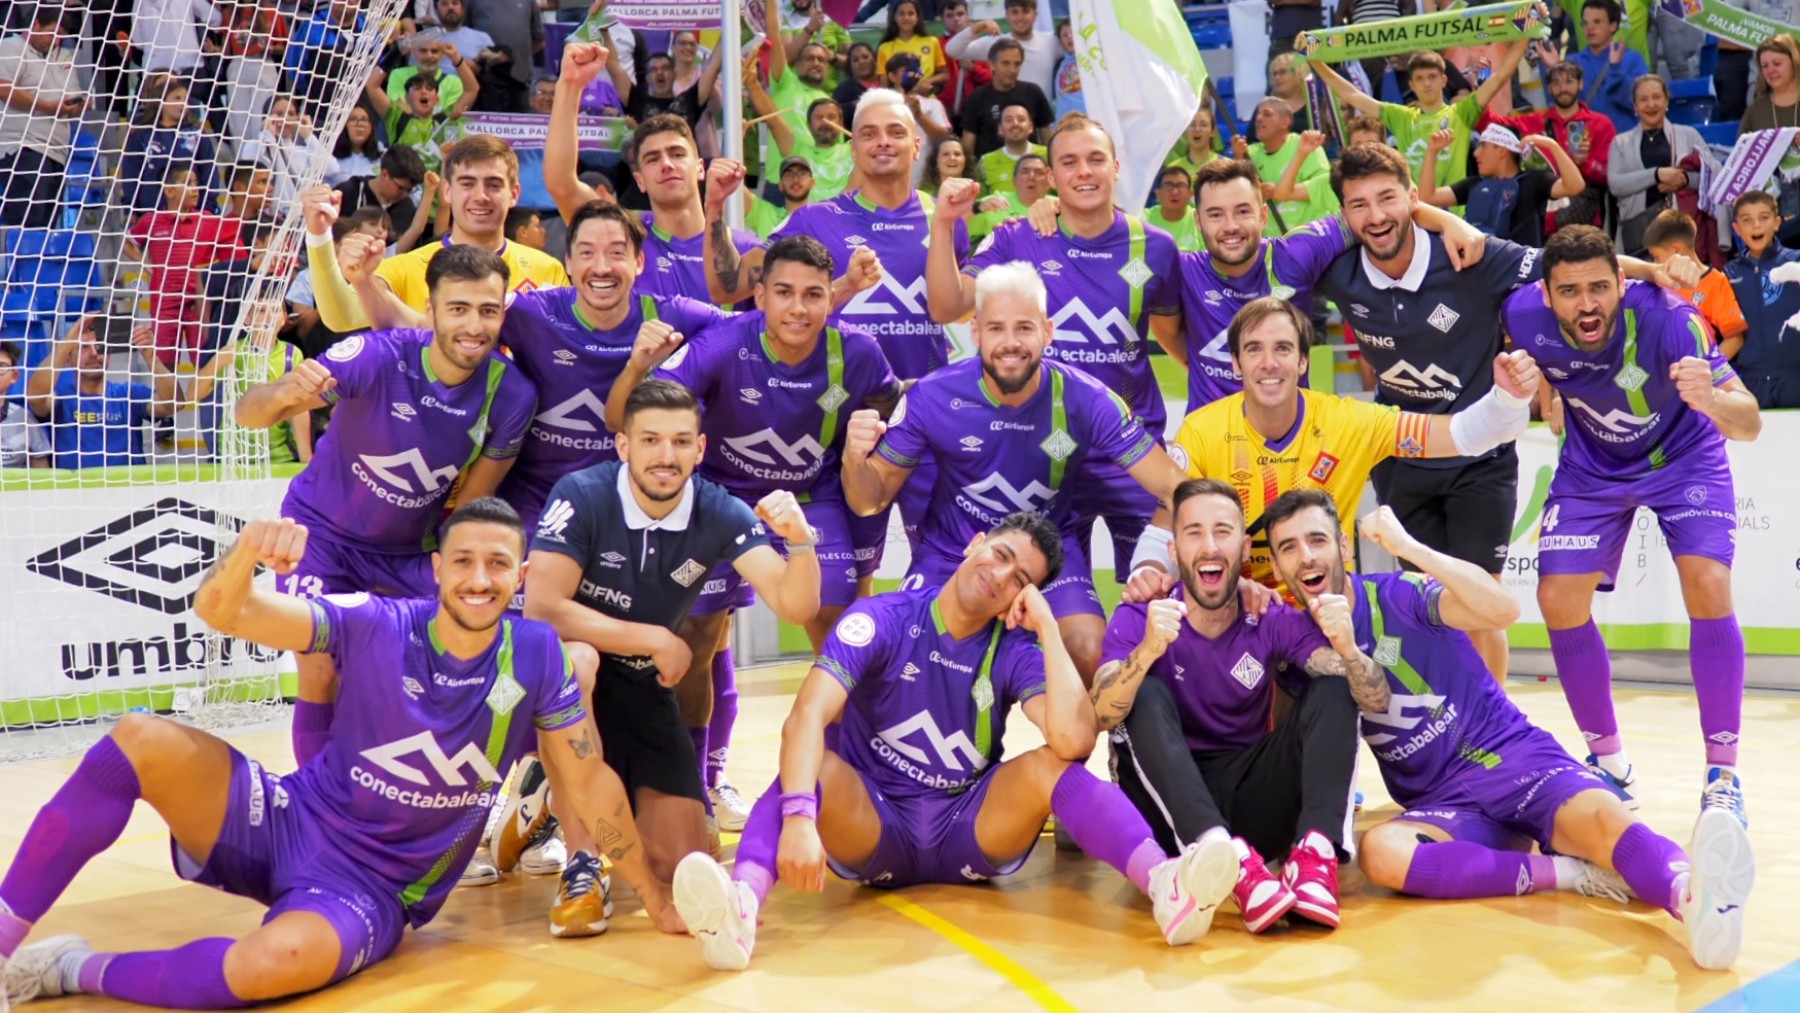 La plantilla del Mallorca Palma Futsal celebra el liderato junto a la afición (1)